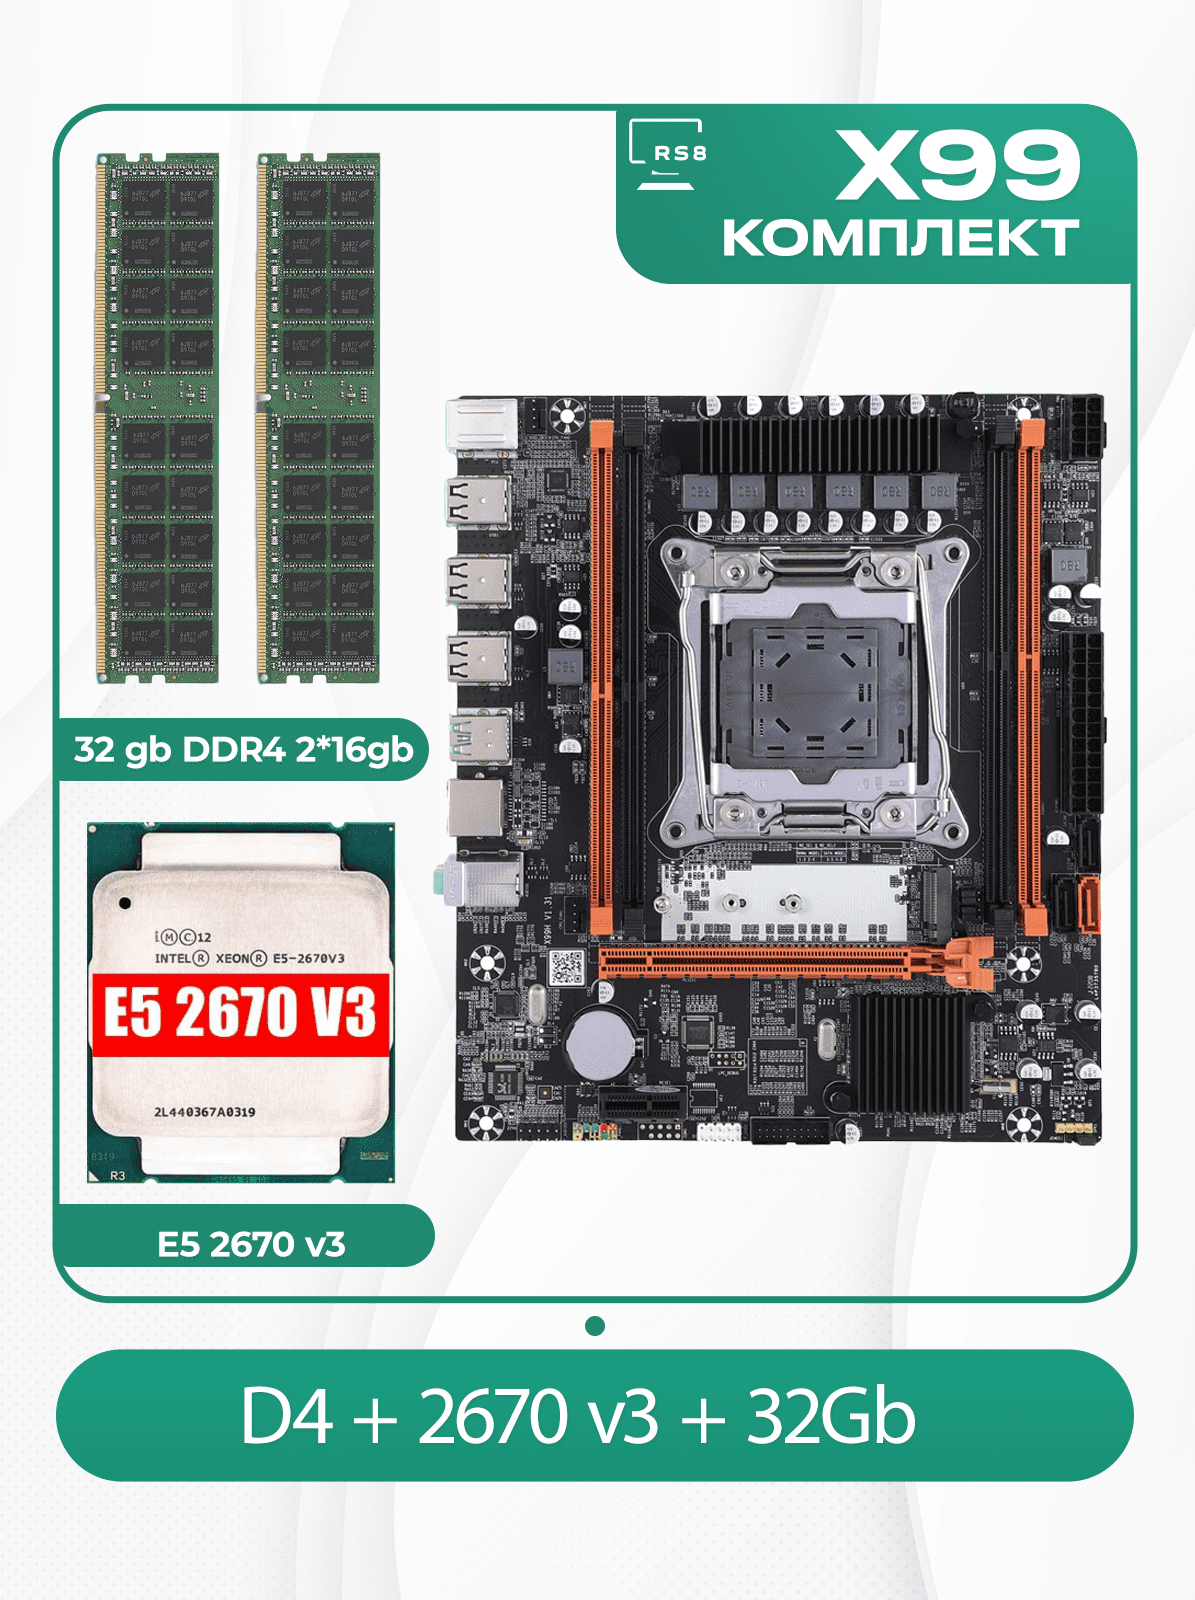 Комплект материнской платы X99: Atermiter D4 2011v3 + Xeon E5 2670v3 + DDR4